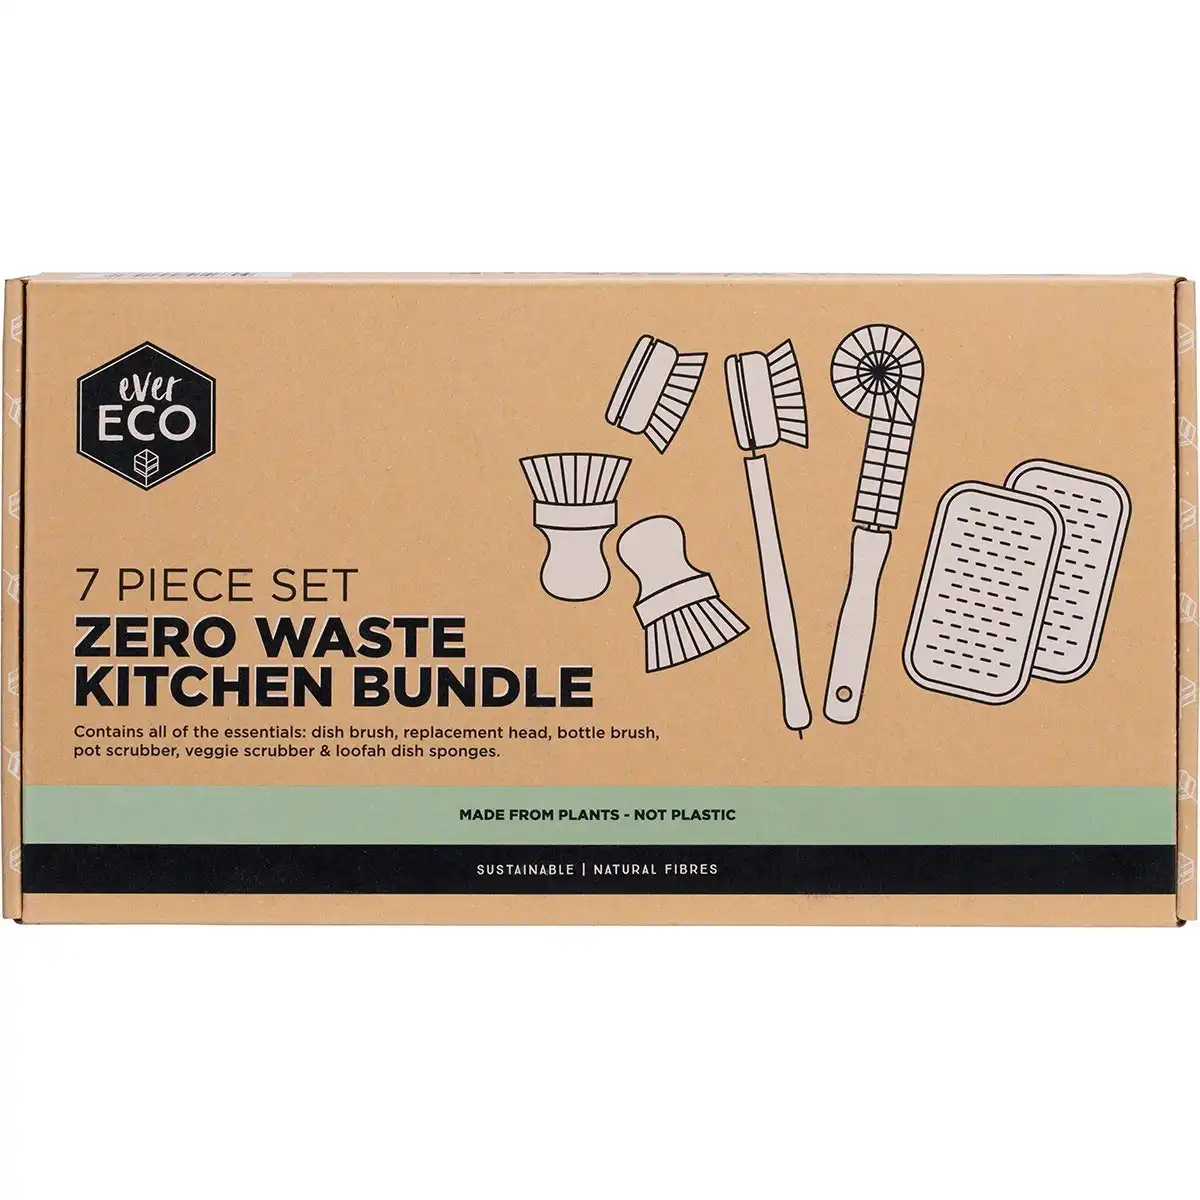 Ever Eco Zero Waste Kitchen Bundle 7 Piece Set 1